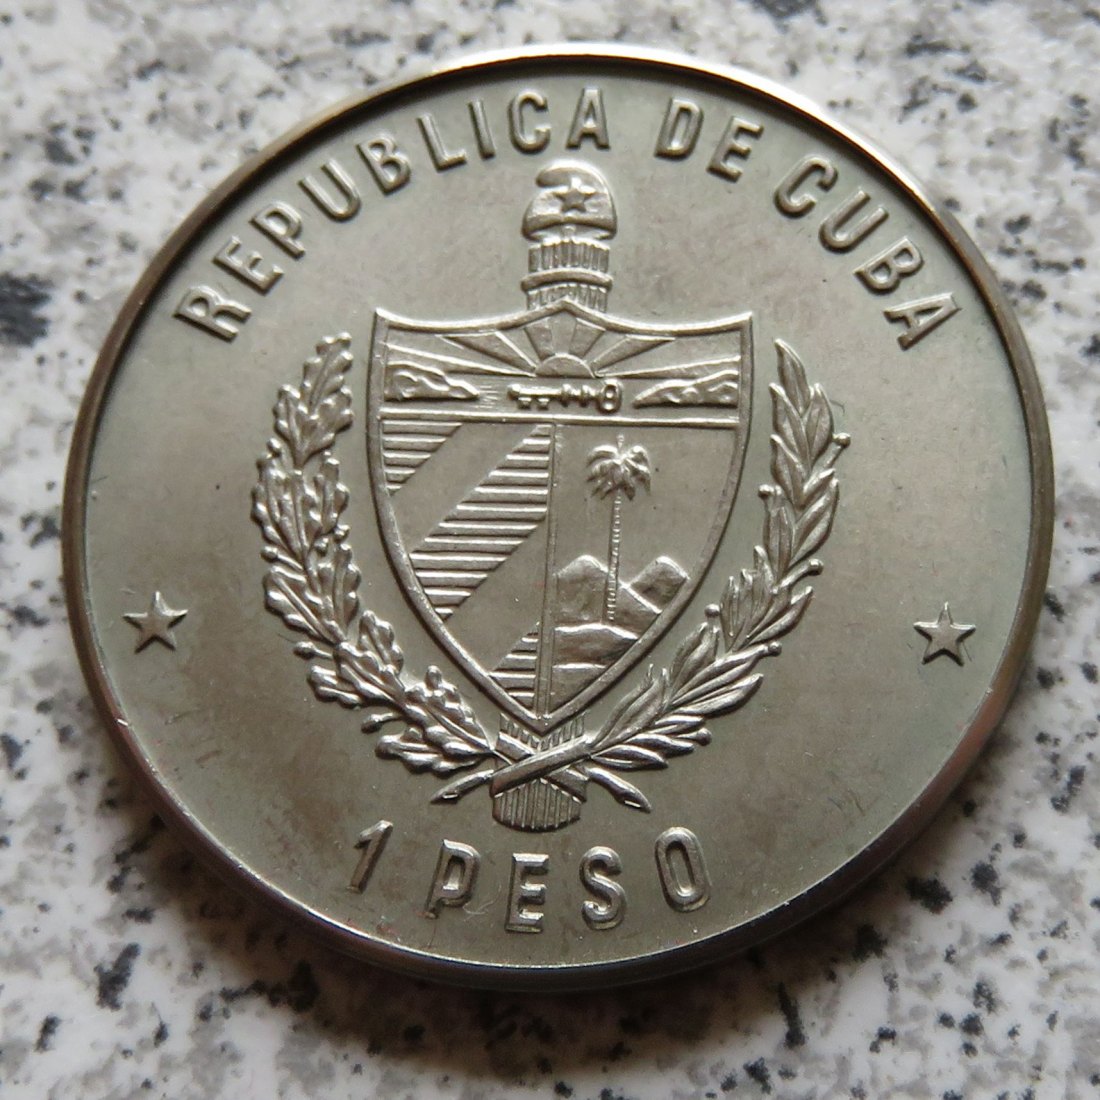  Cuba 1 Peso 1985 - Verteidigung der Natur - Papagei   